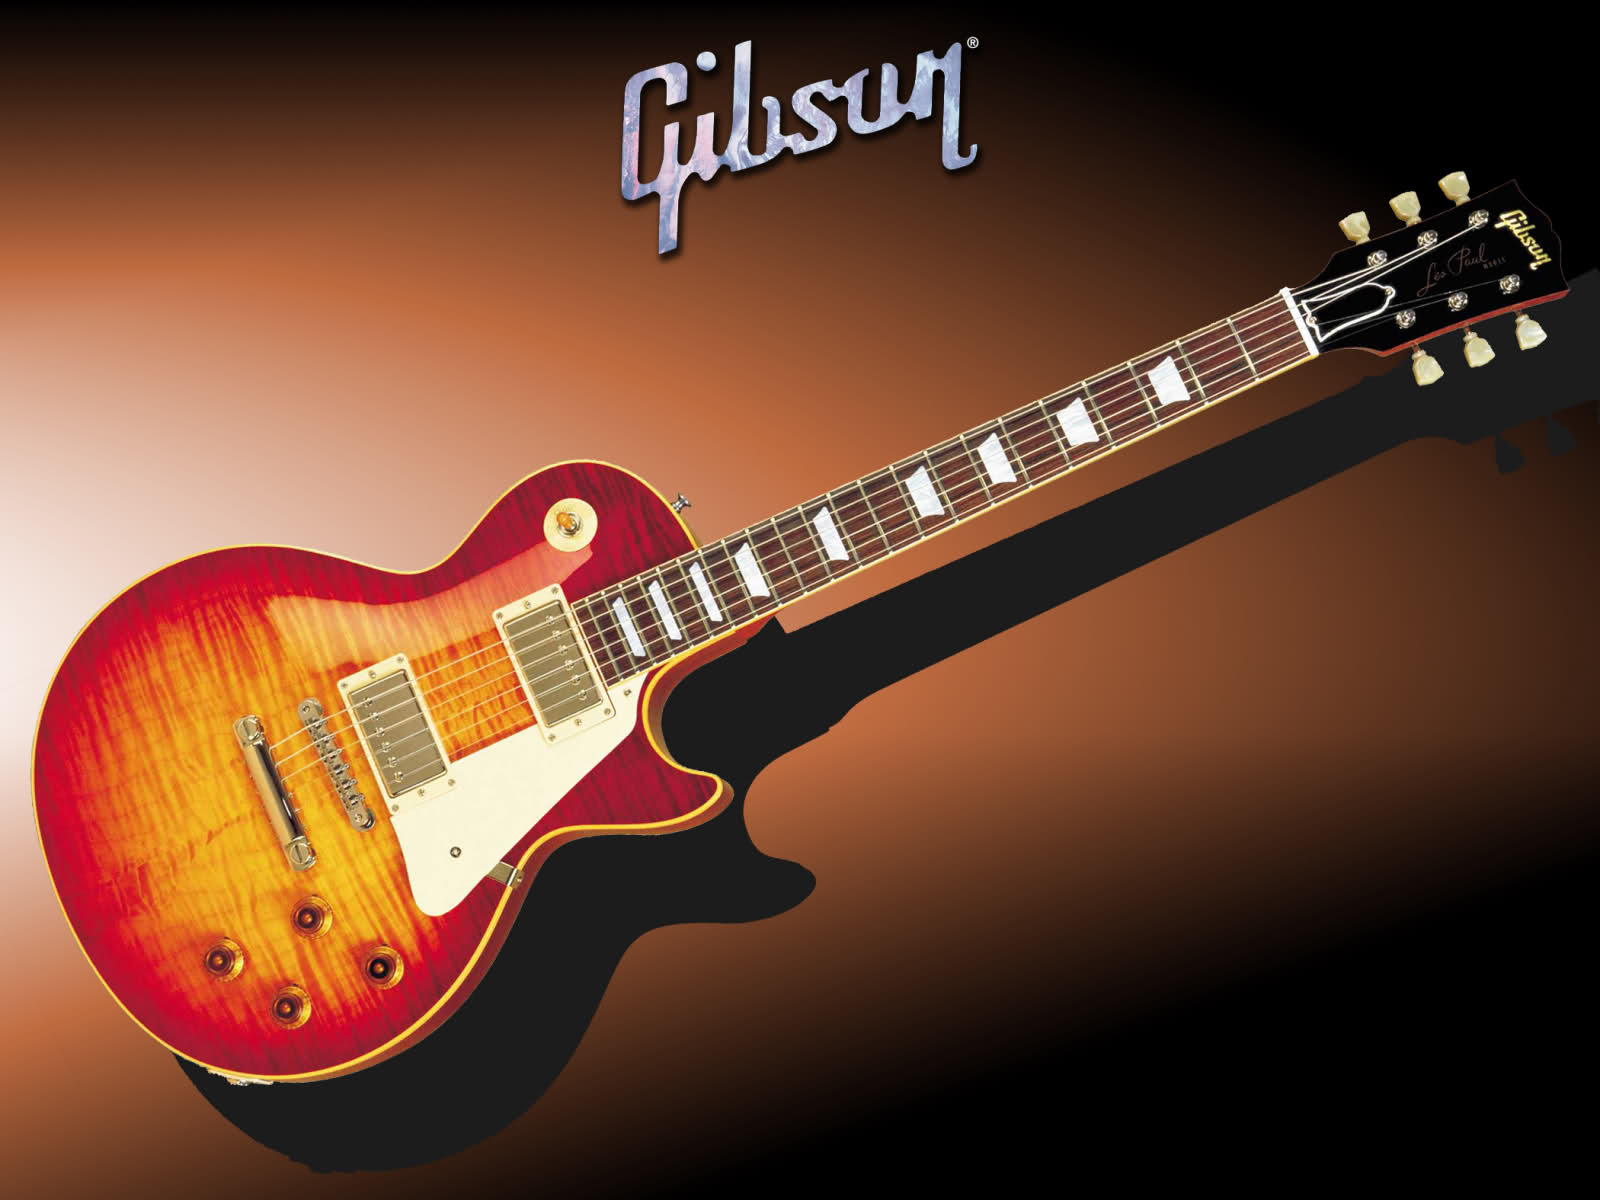 Imageci Gibson Guitar Wallpaper HD Background In